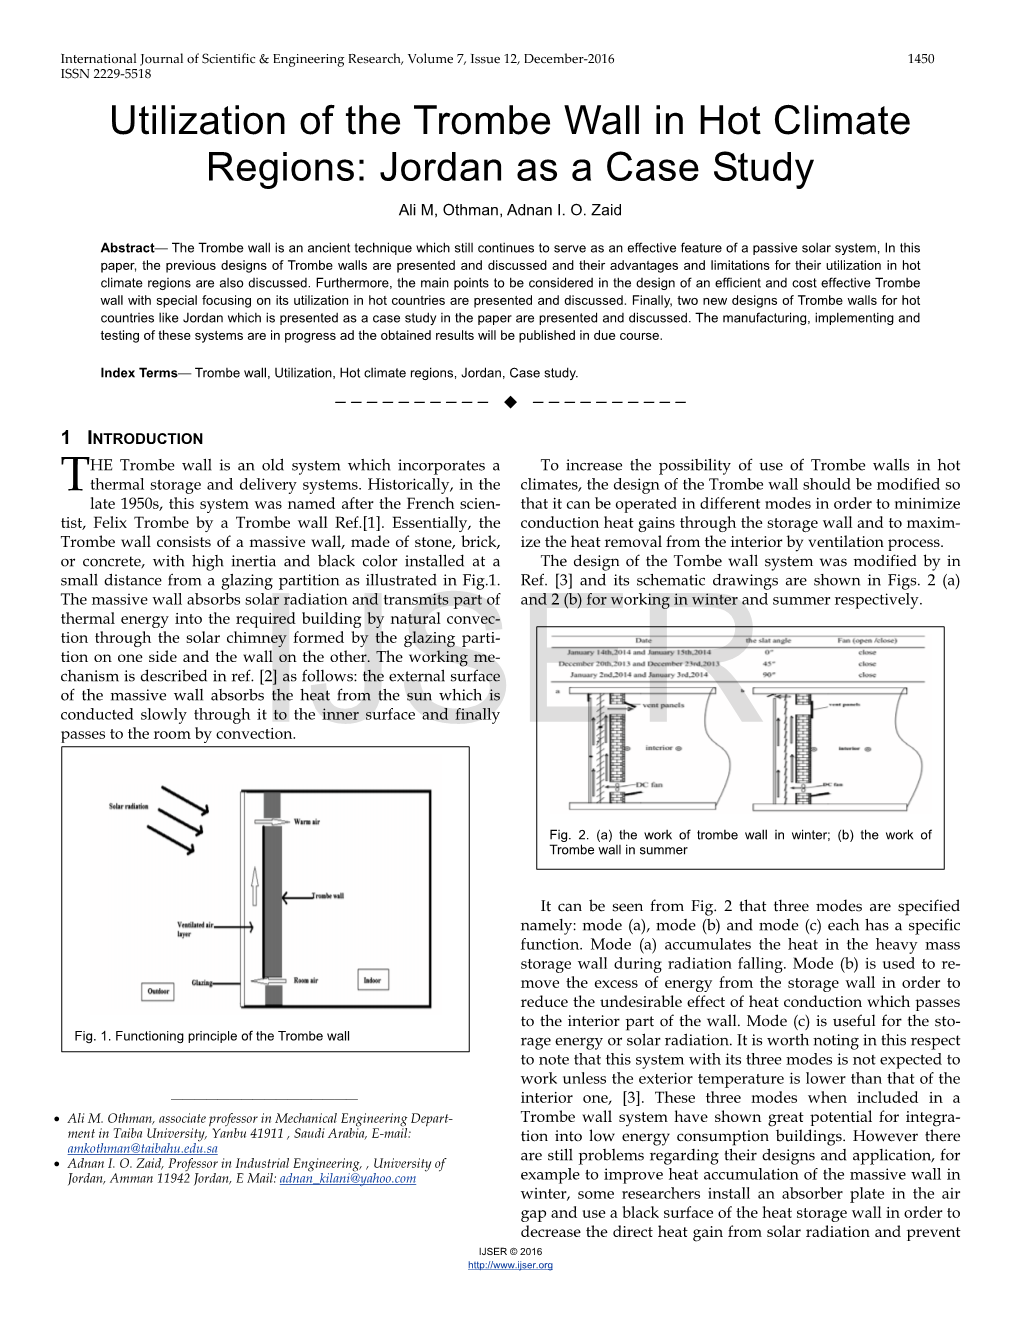 Utilization of the Trombe Wall in Hot Climate Regions: Jordan As a Case Study Ali M, Othman, Adnan I